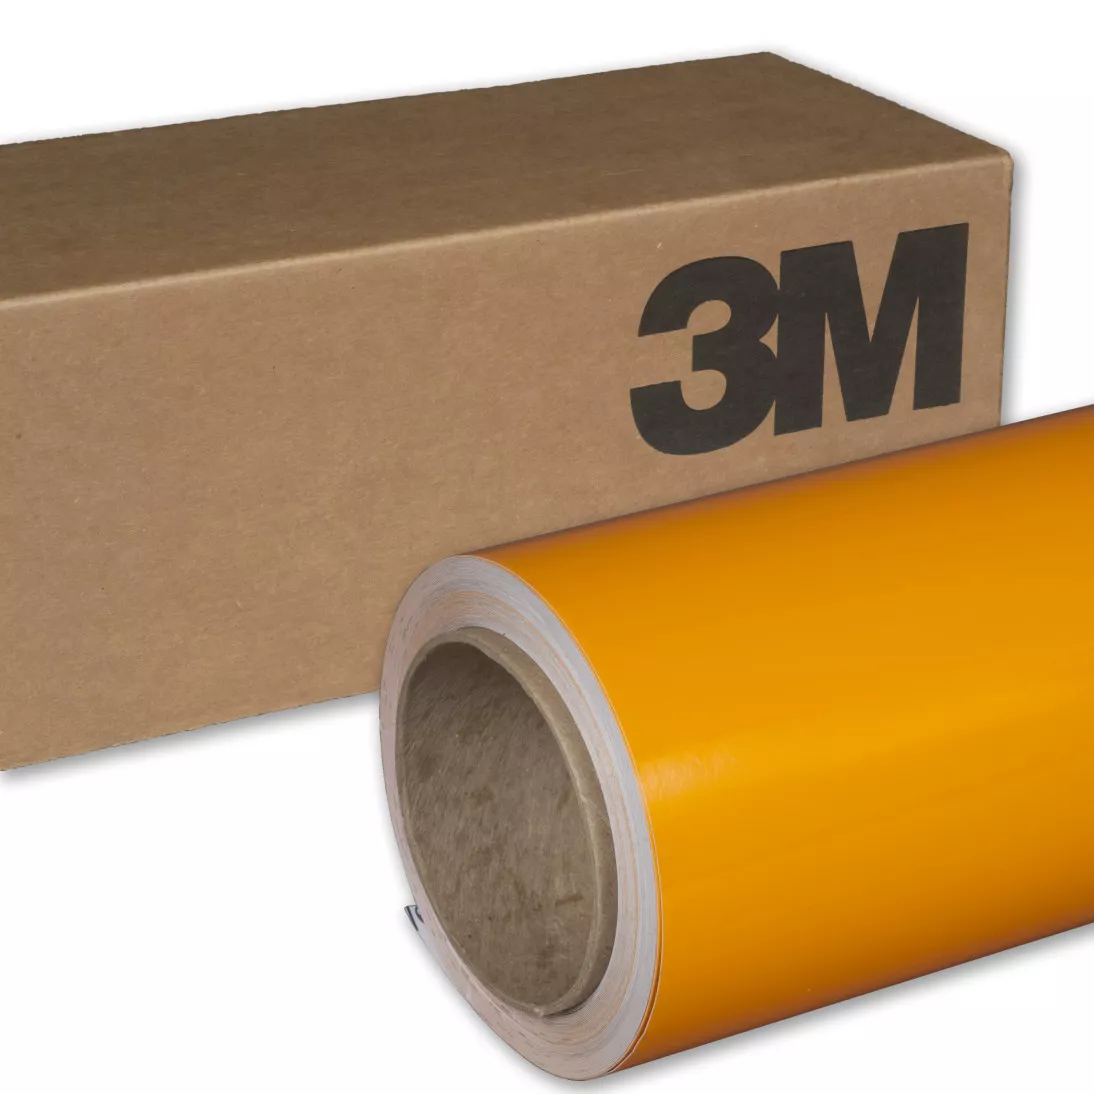 3M™ Wrap Film Series 1080-G54, Gloss Bright Orange, 60 in x 10 yd